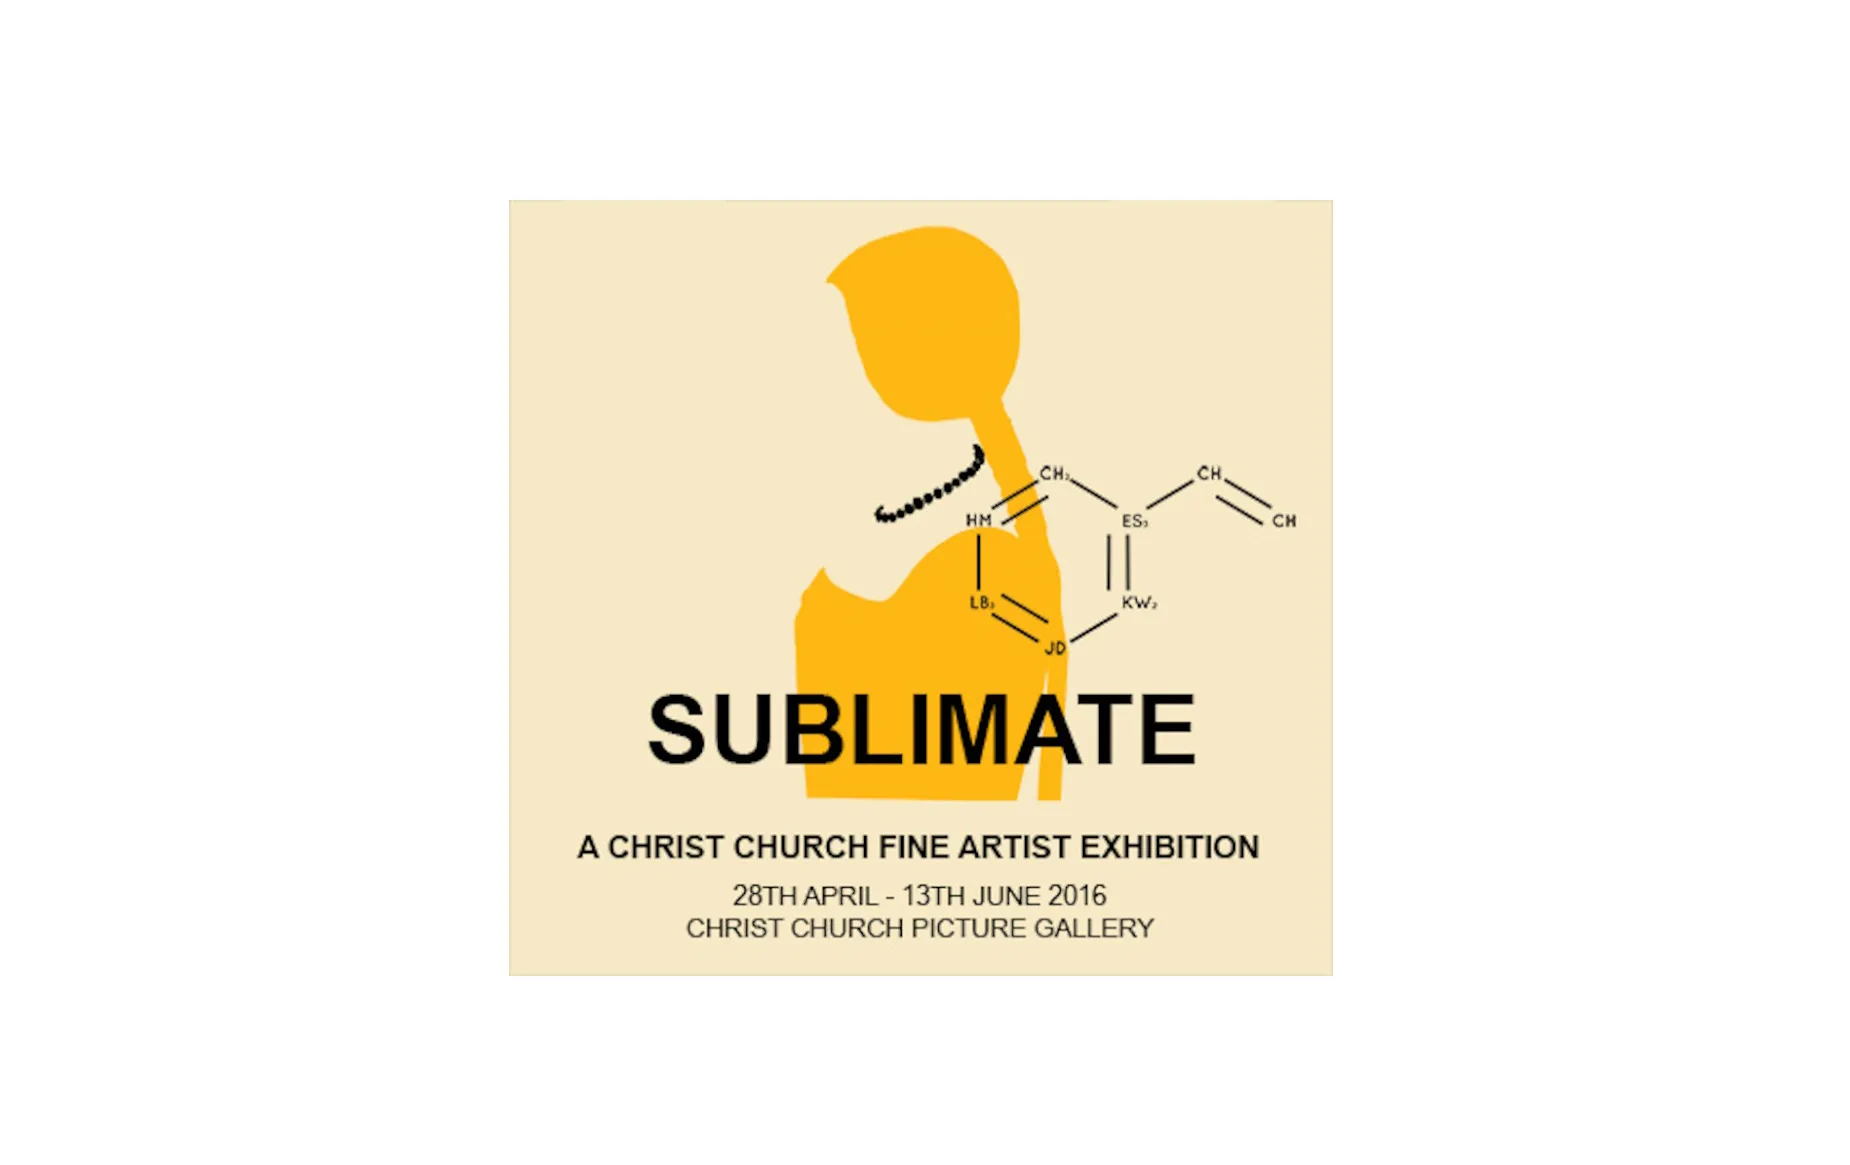 Sublimate exhibition poster